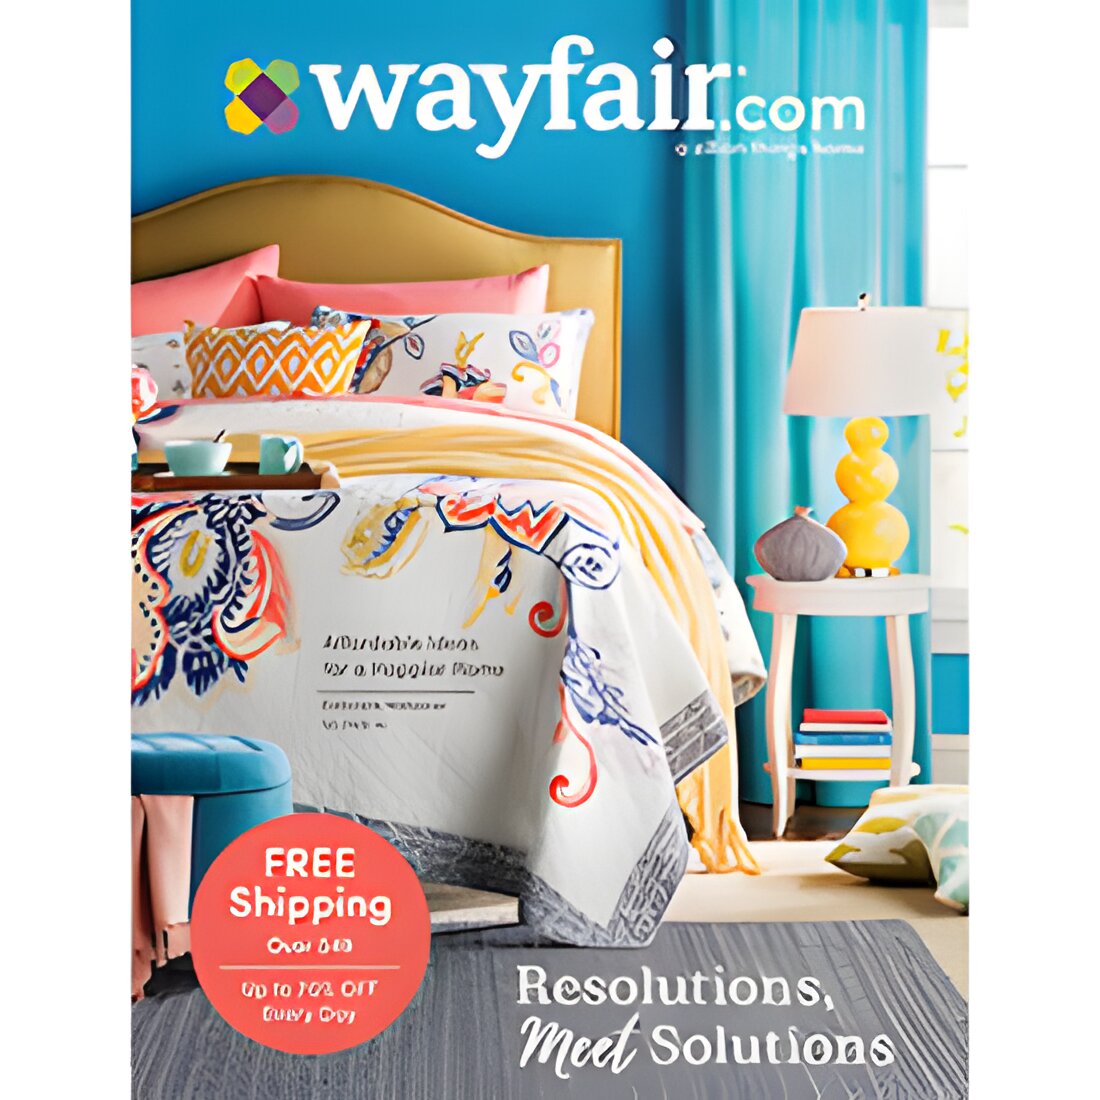 Free Hard Copy Of Wayfair Catalog